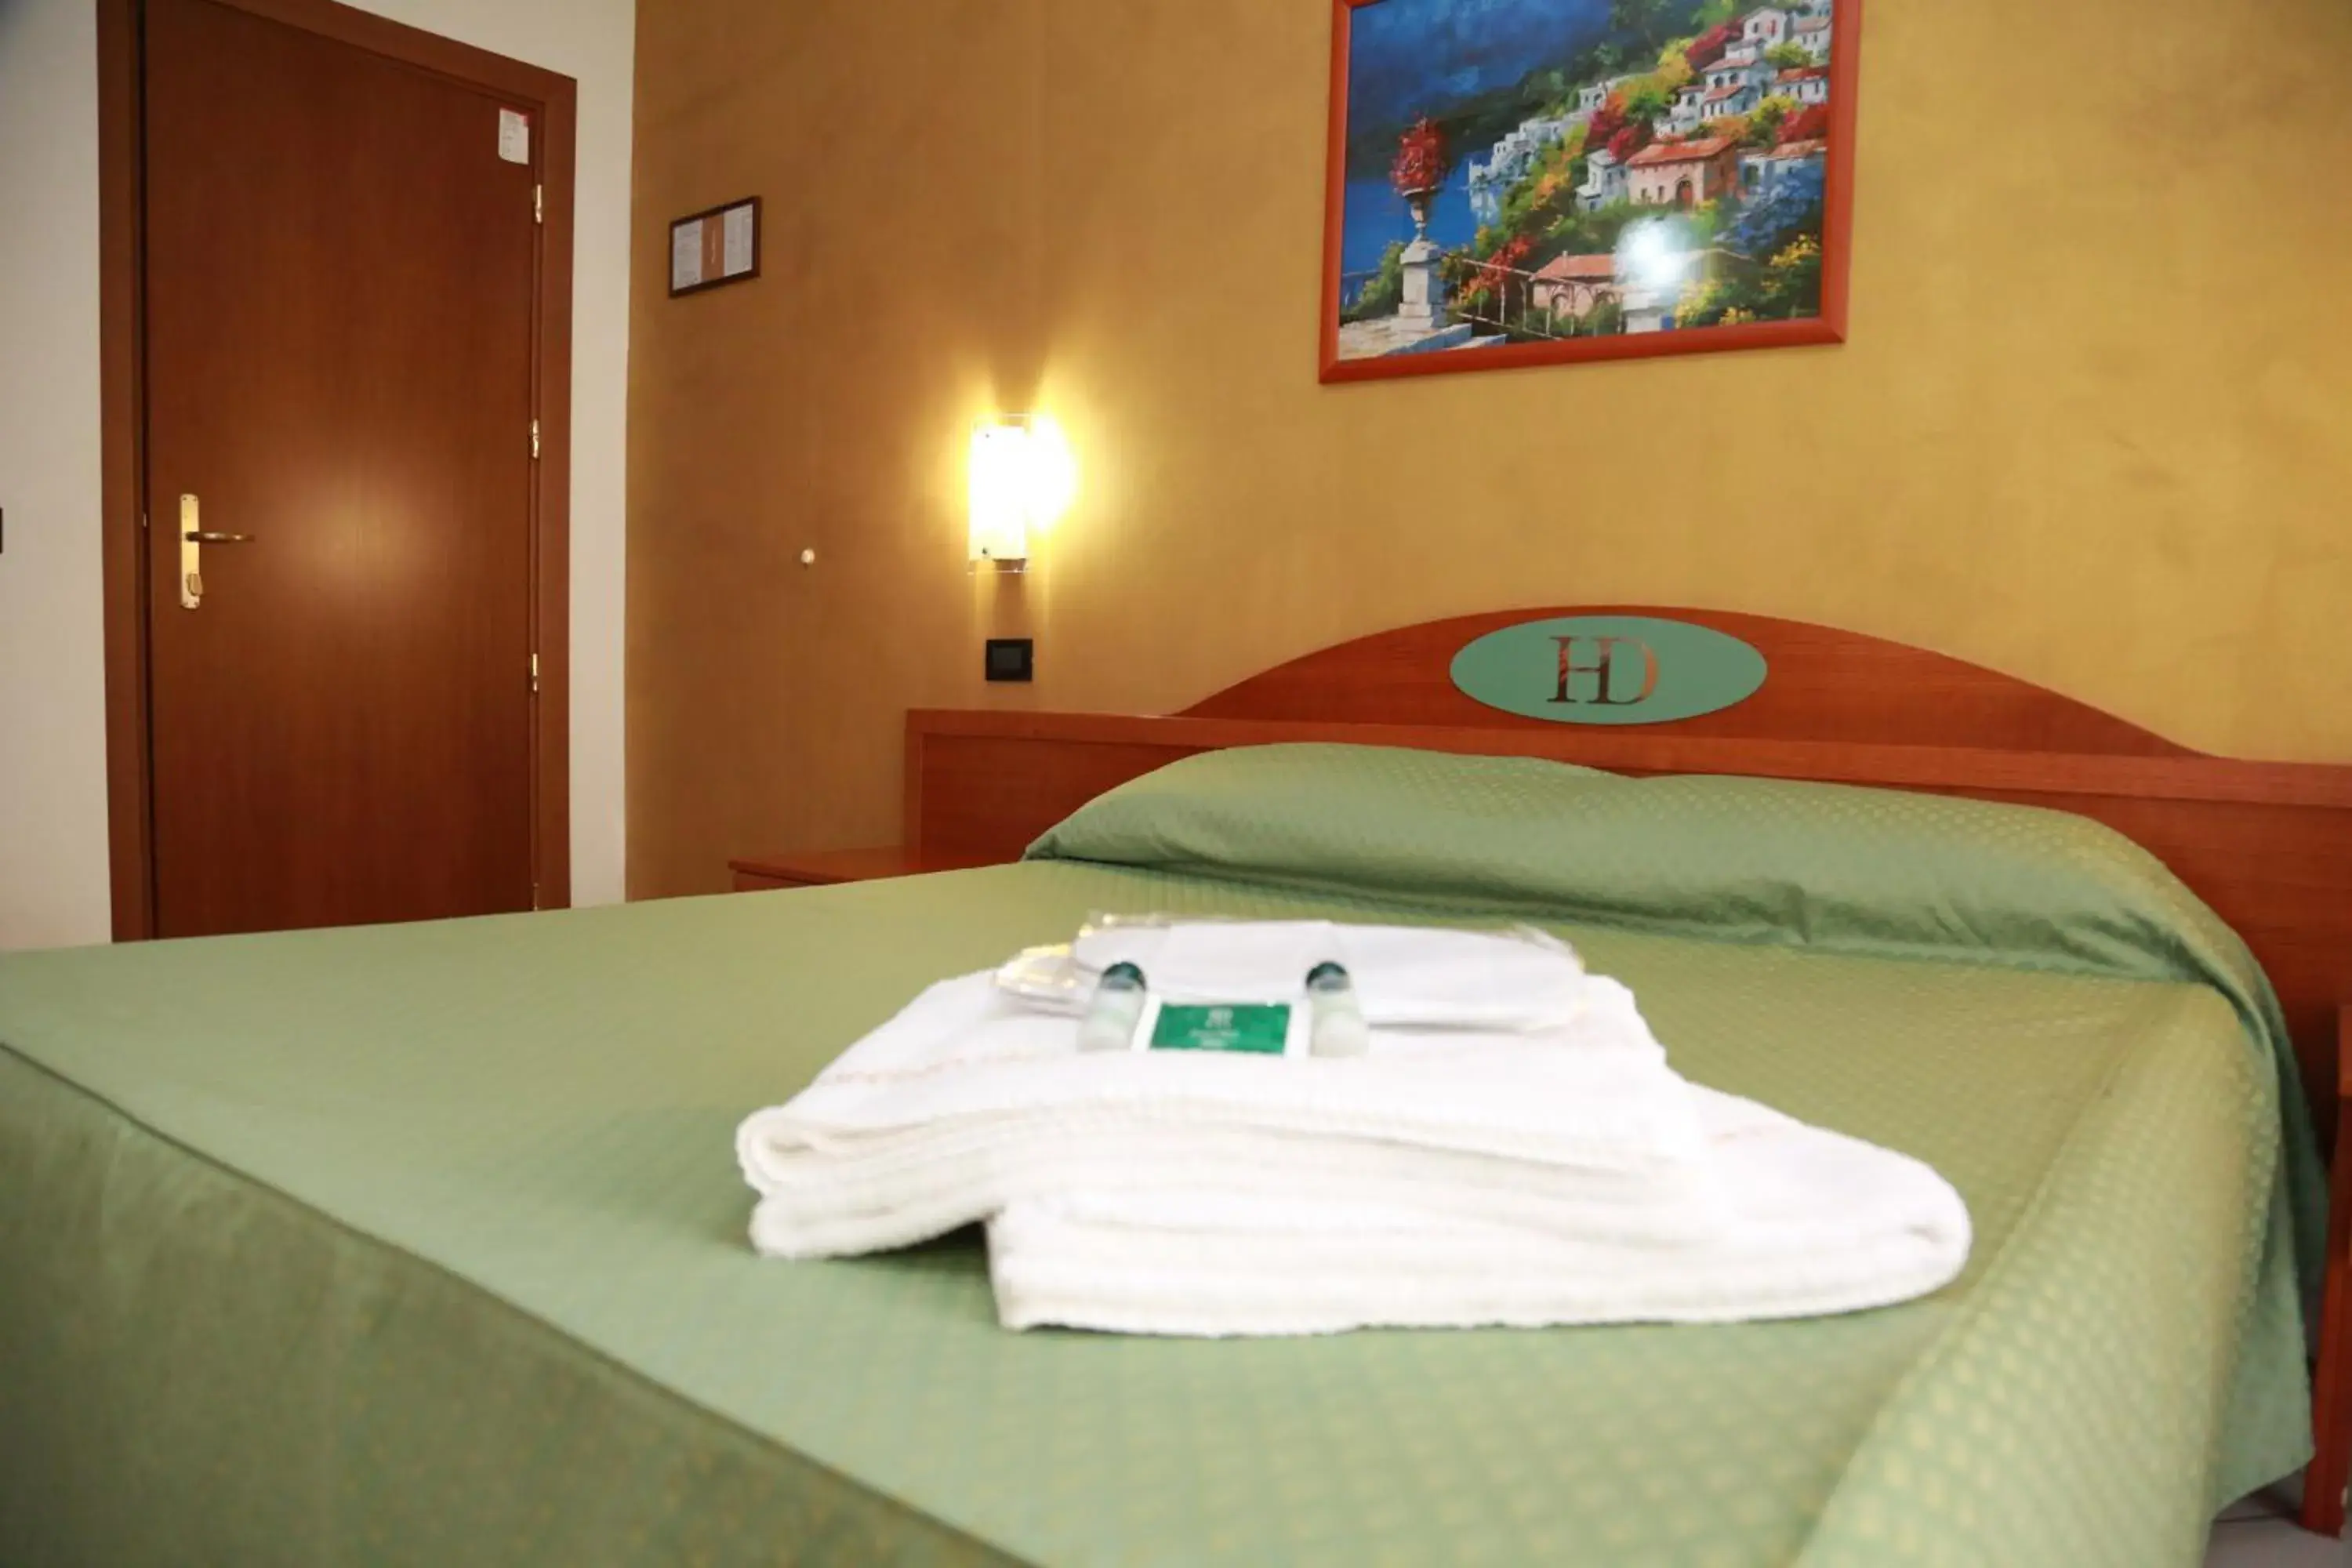 Bed, Room Photo in Hotel Dor